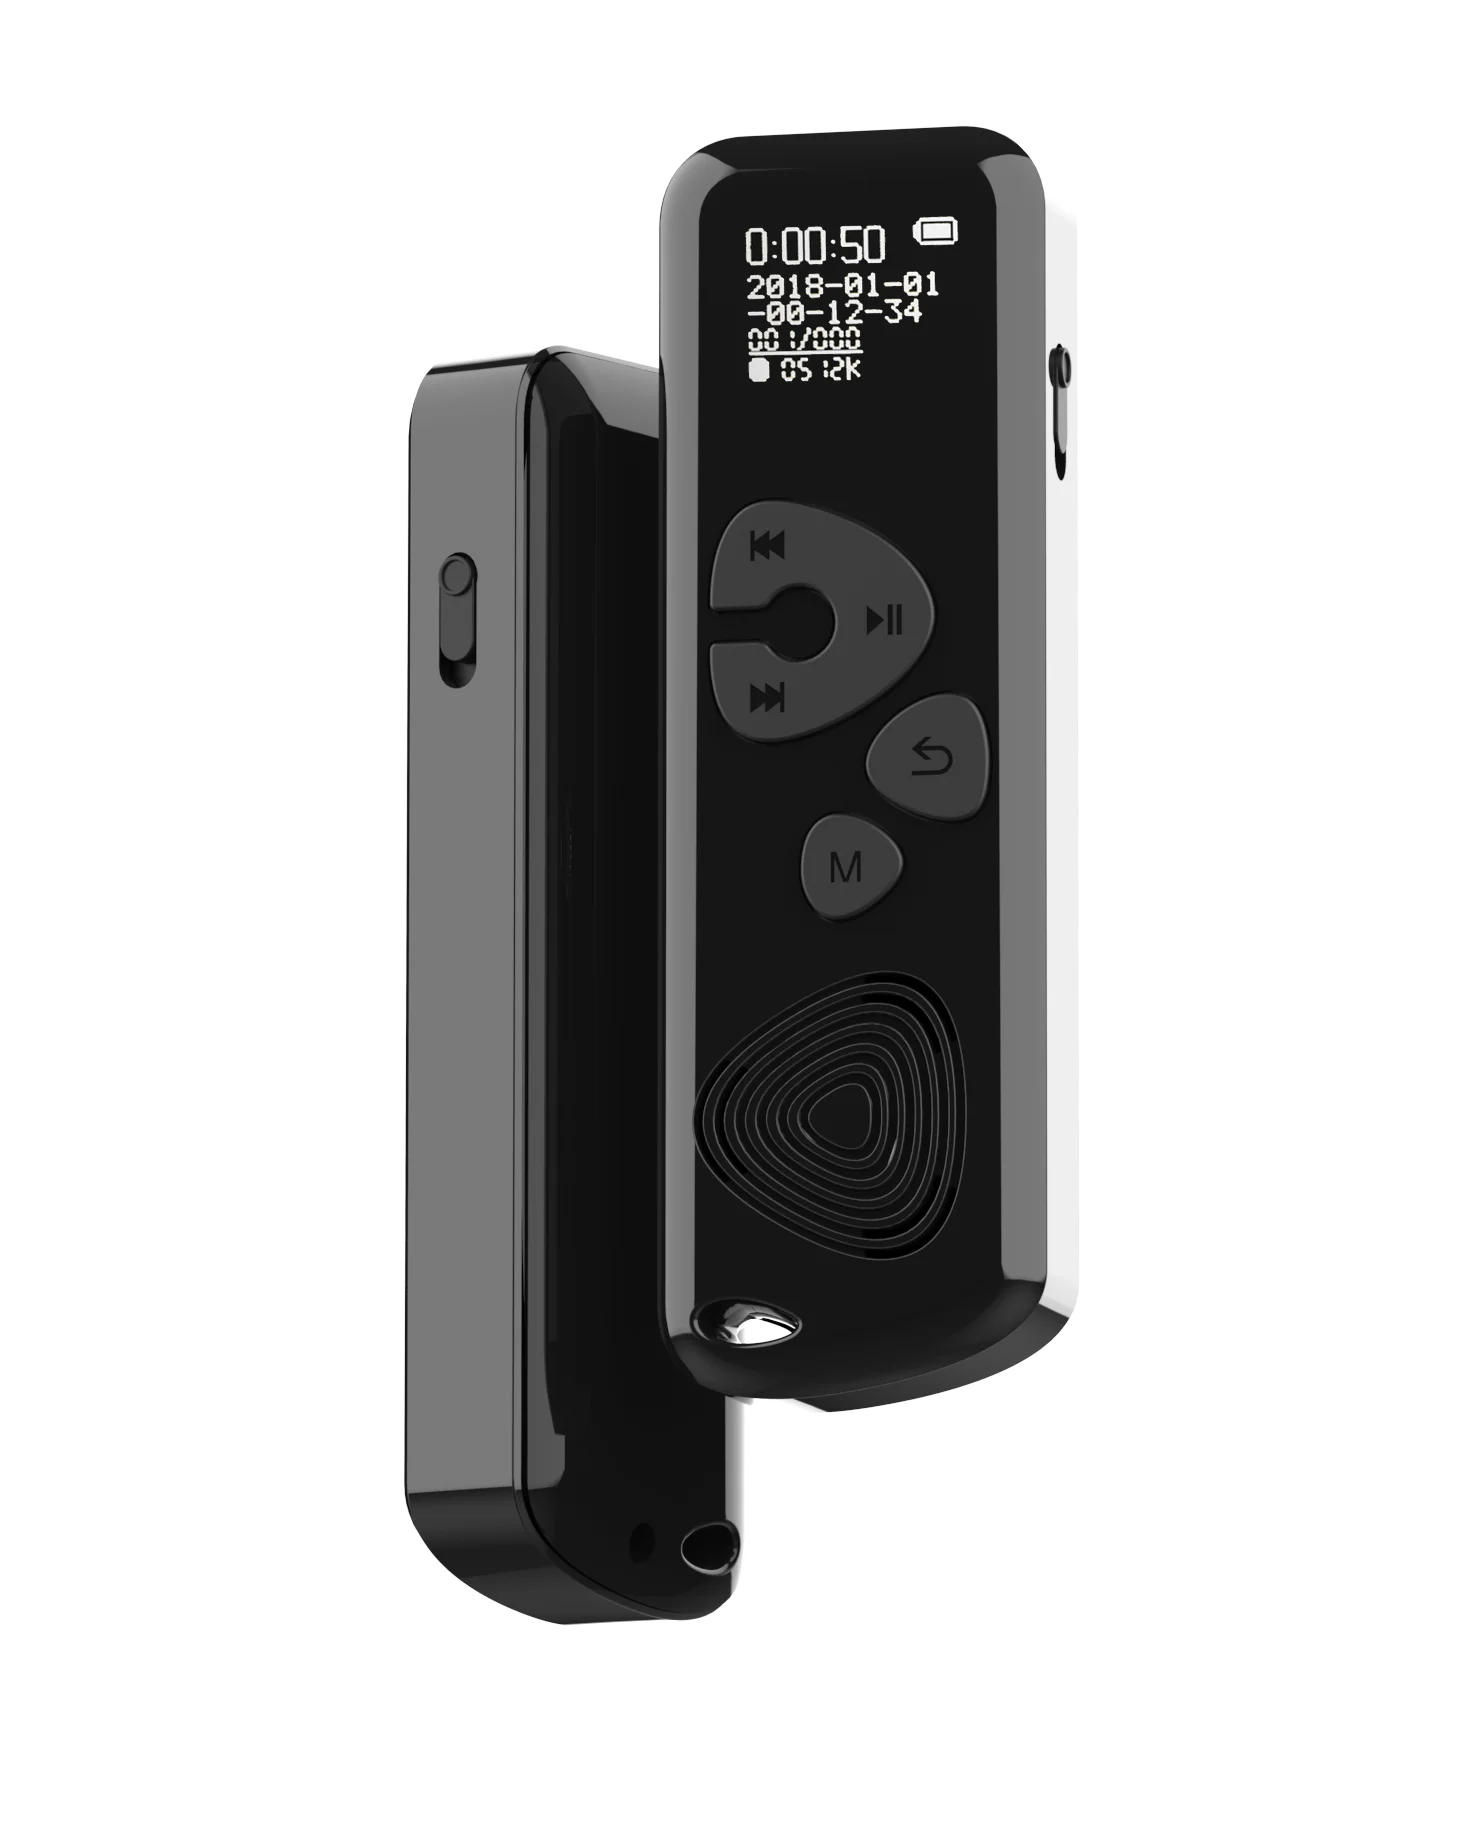 product-Hnsat-Spy usb voice recorder portable test mini USB Recorder Recording Pen-img